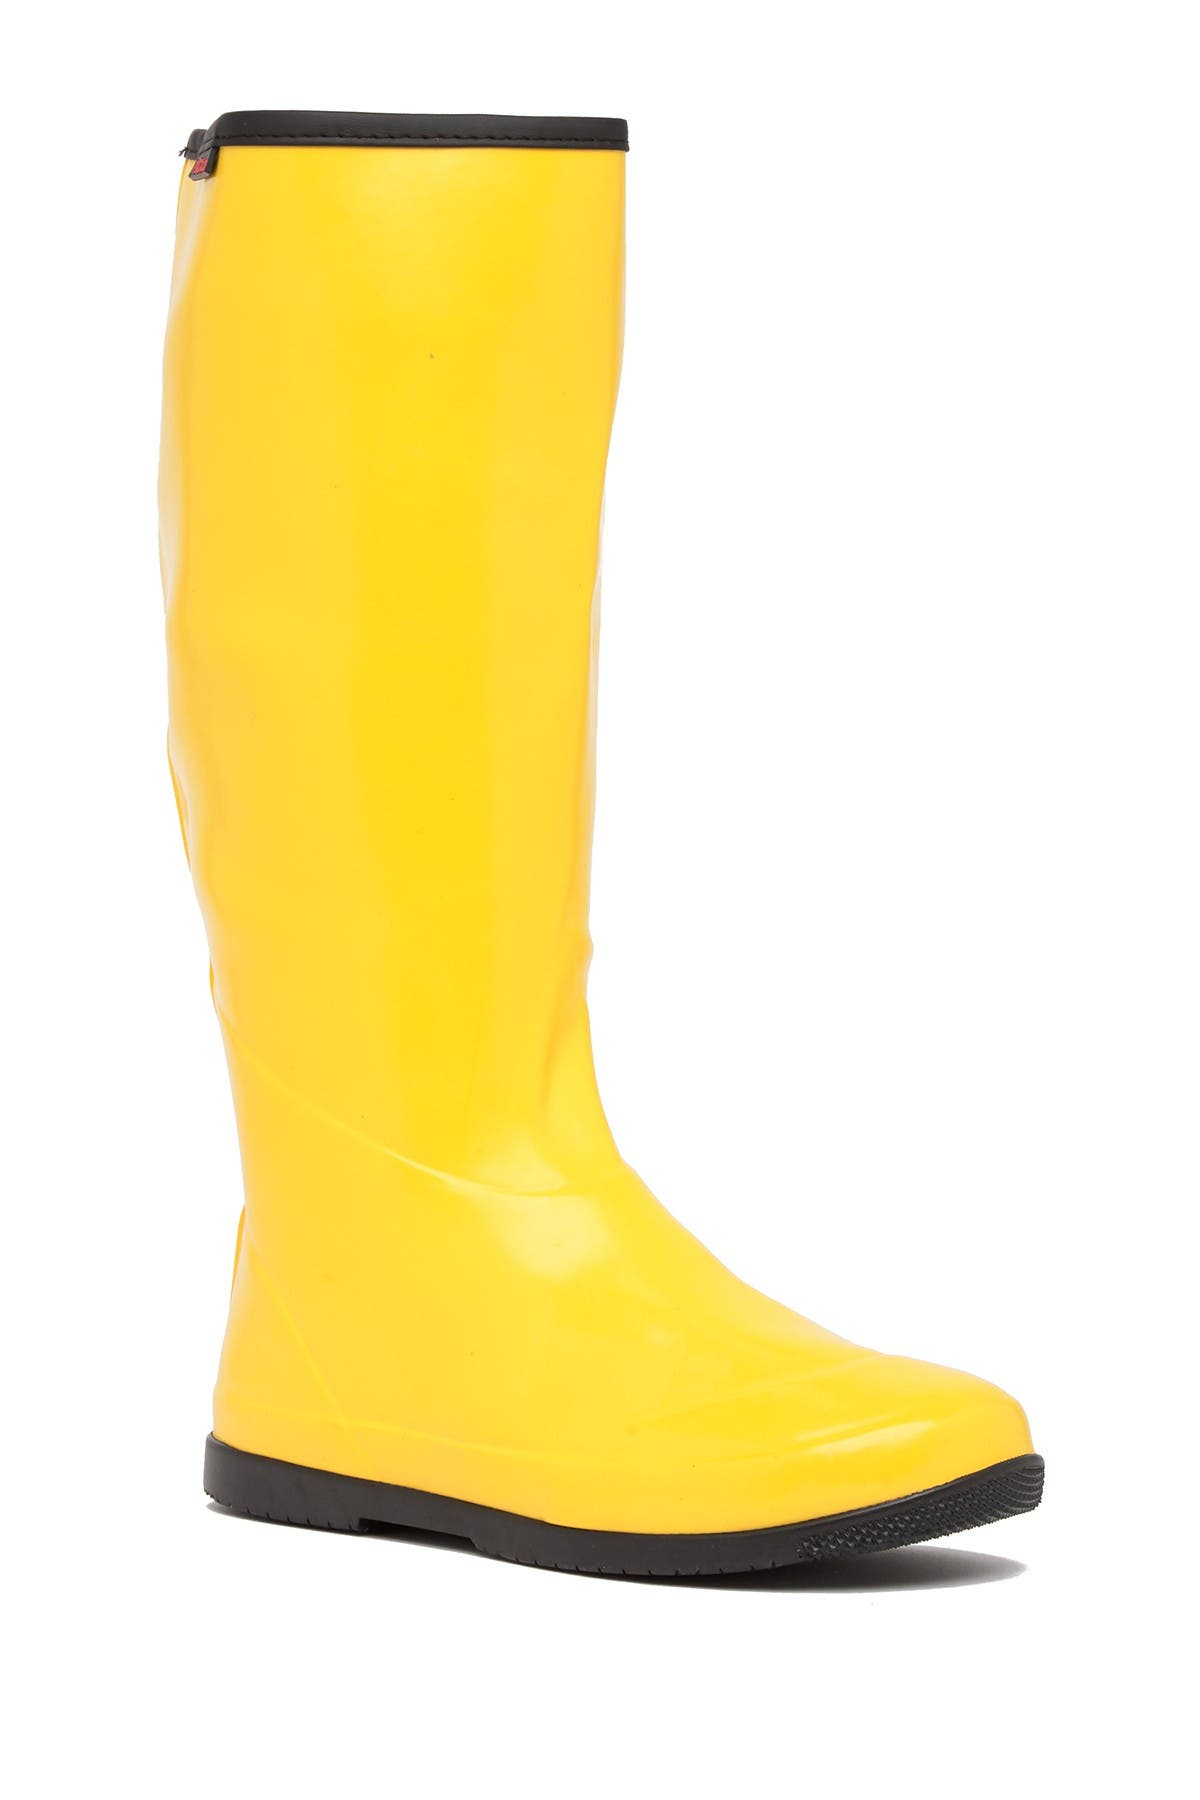 baffin packable rain boots